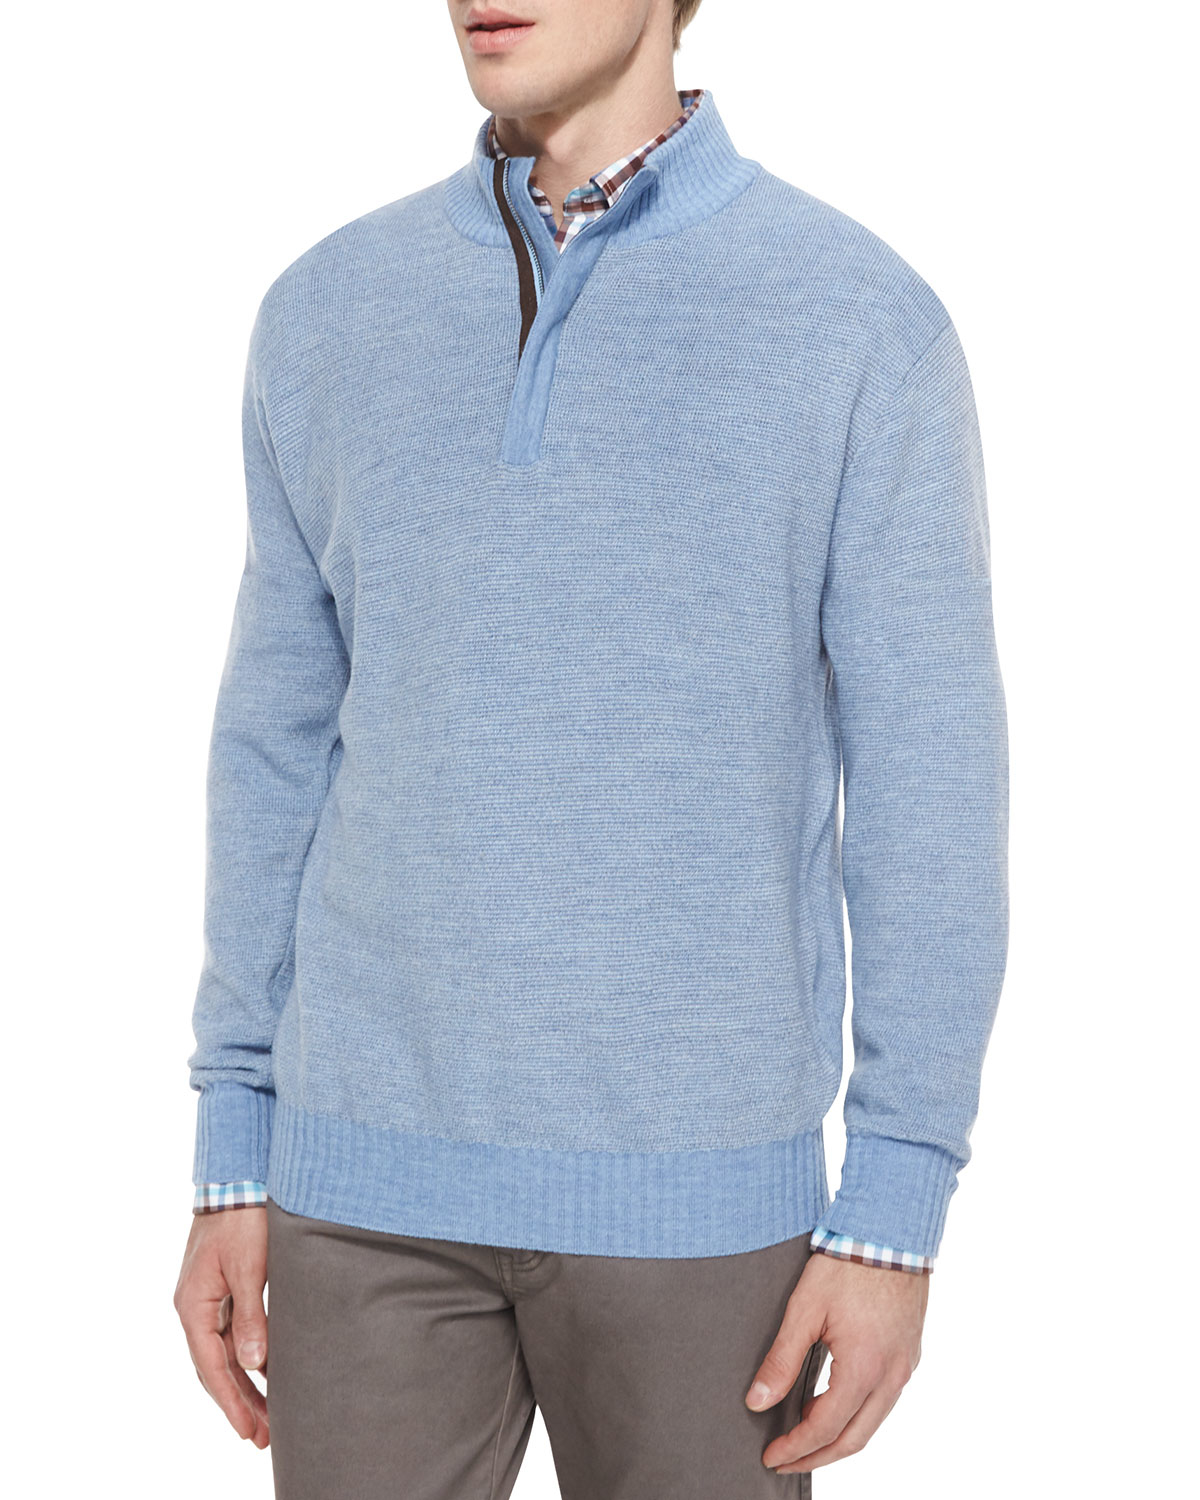 Lyst - Peter millar Textured Wool Quarter-zip Pullover Sweater in Blue ...